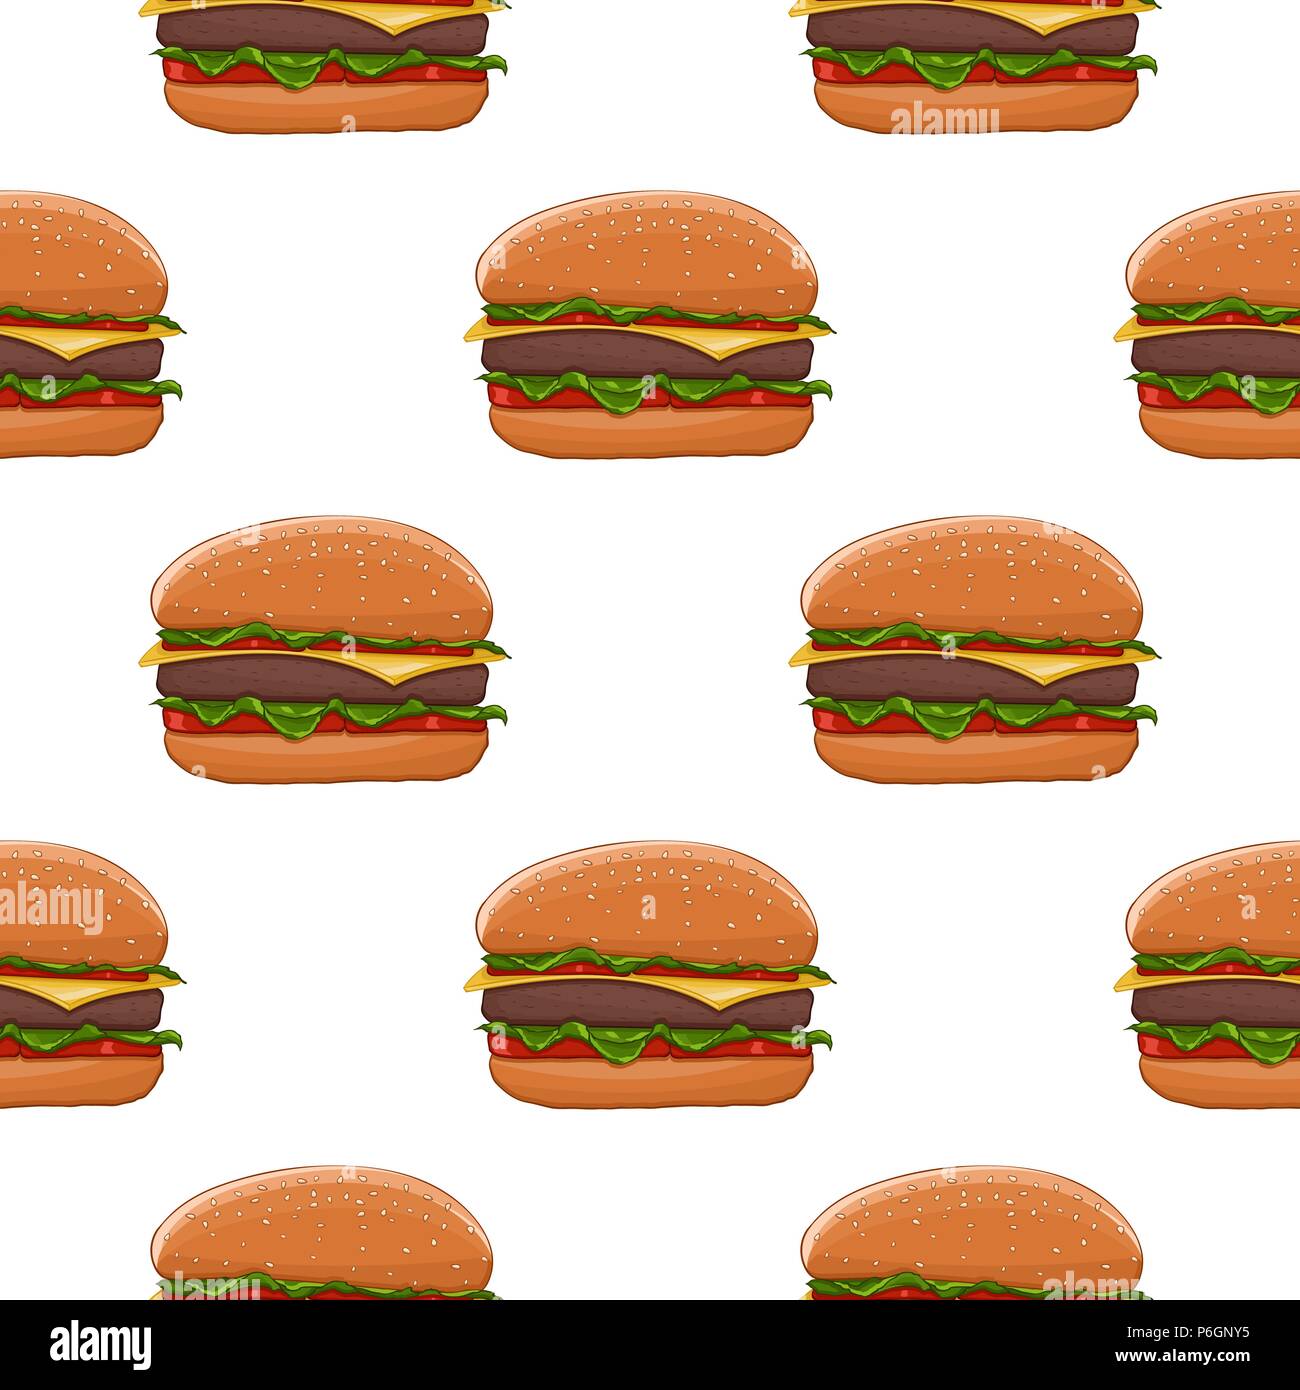 Hamburger Colored Drawing As Seamless Pattern Stock Vector Image Art Alamy